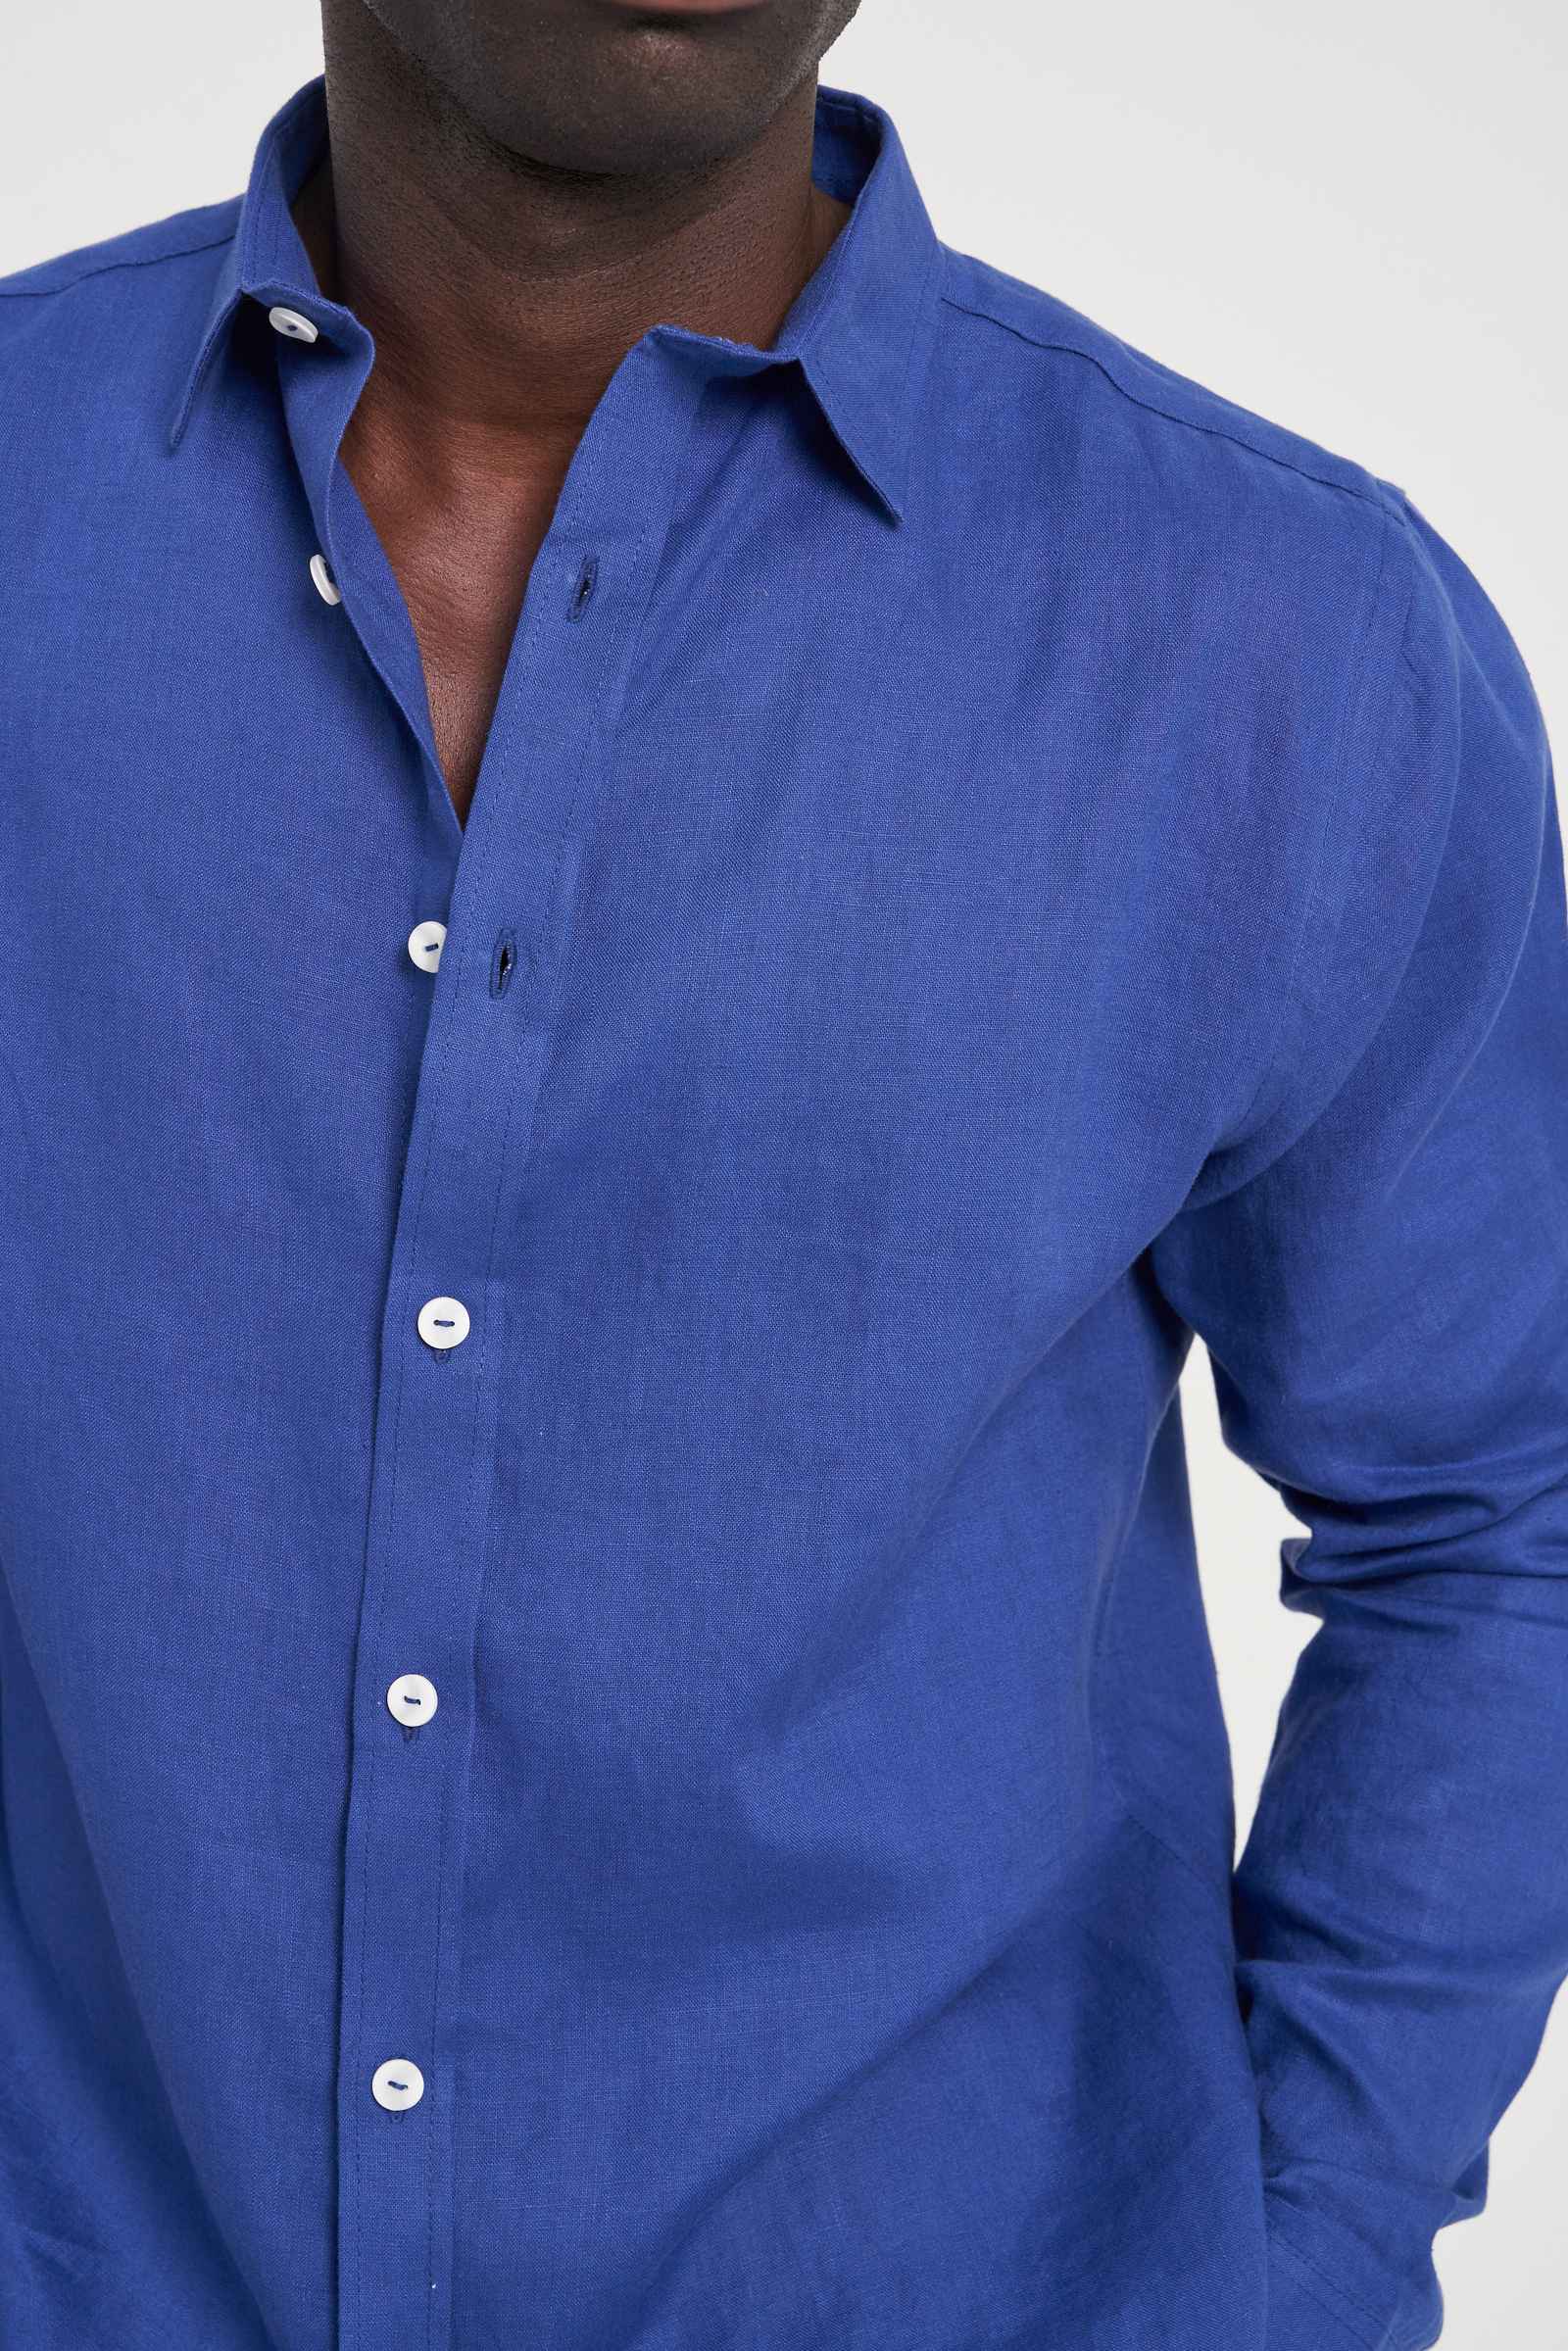 Long Sleeves Linen Shirt Royal Blue